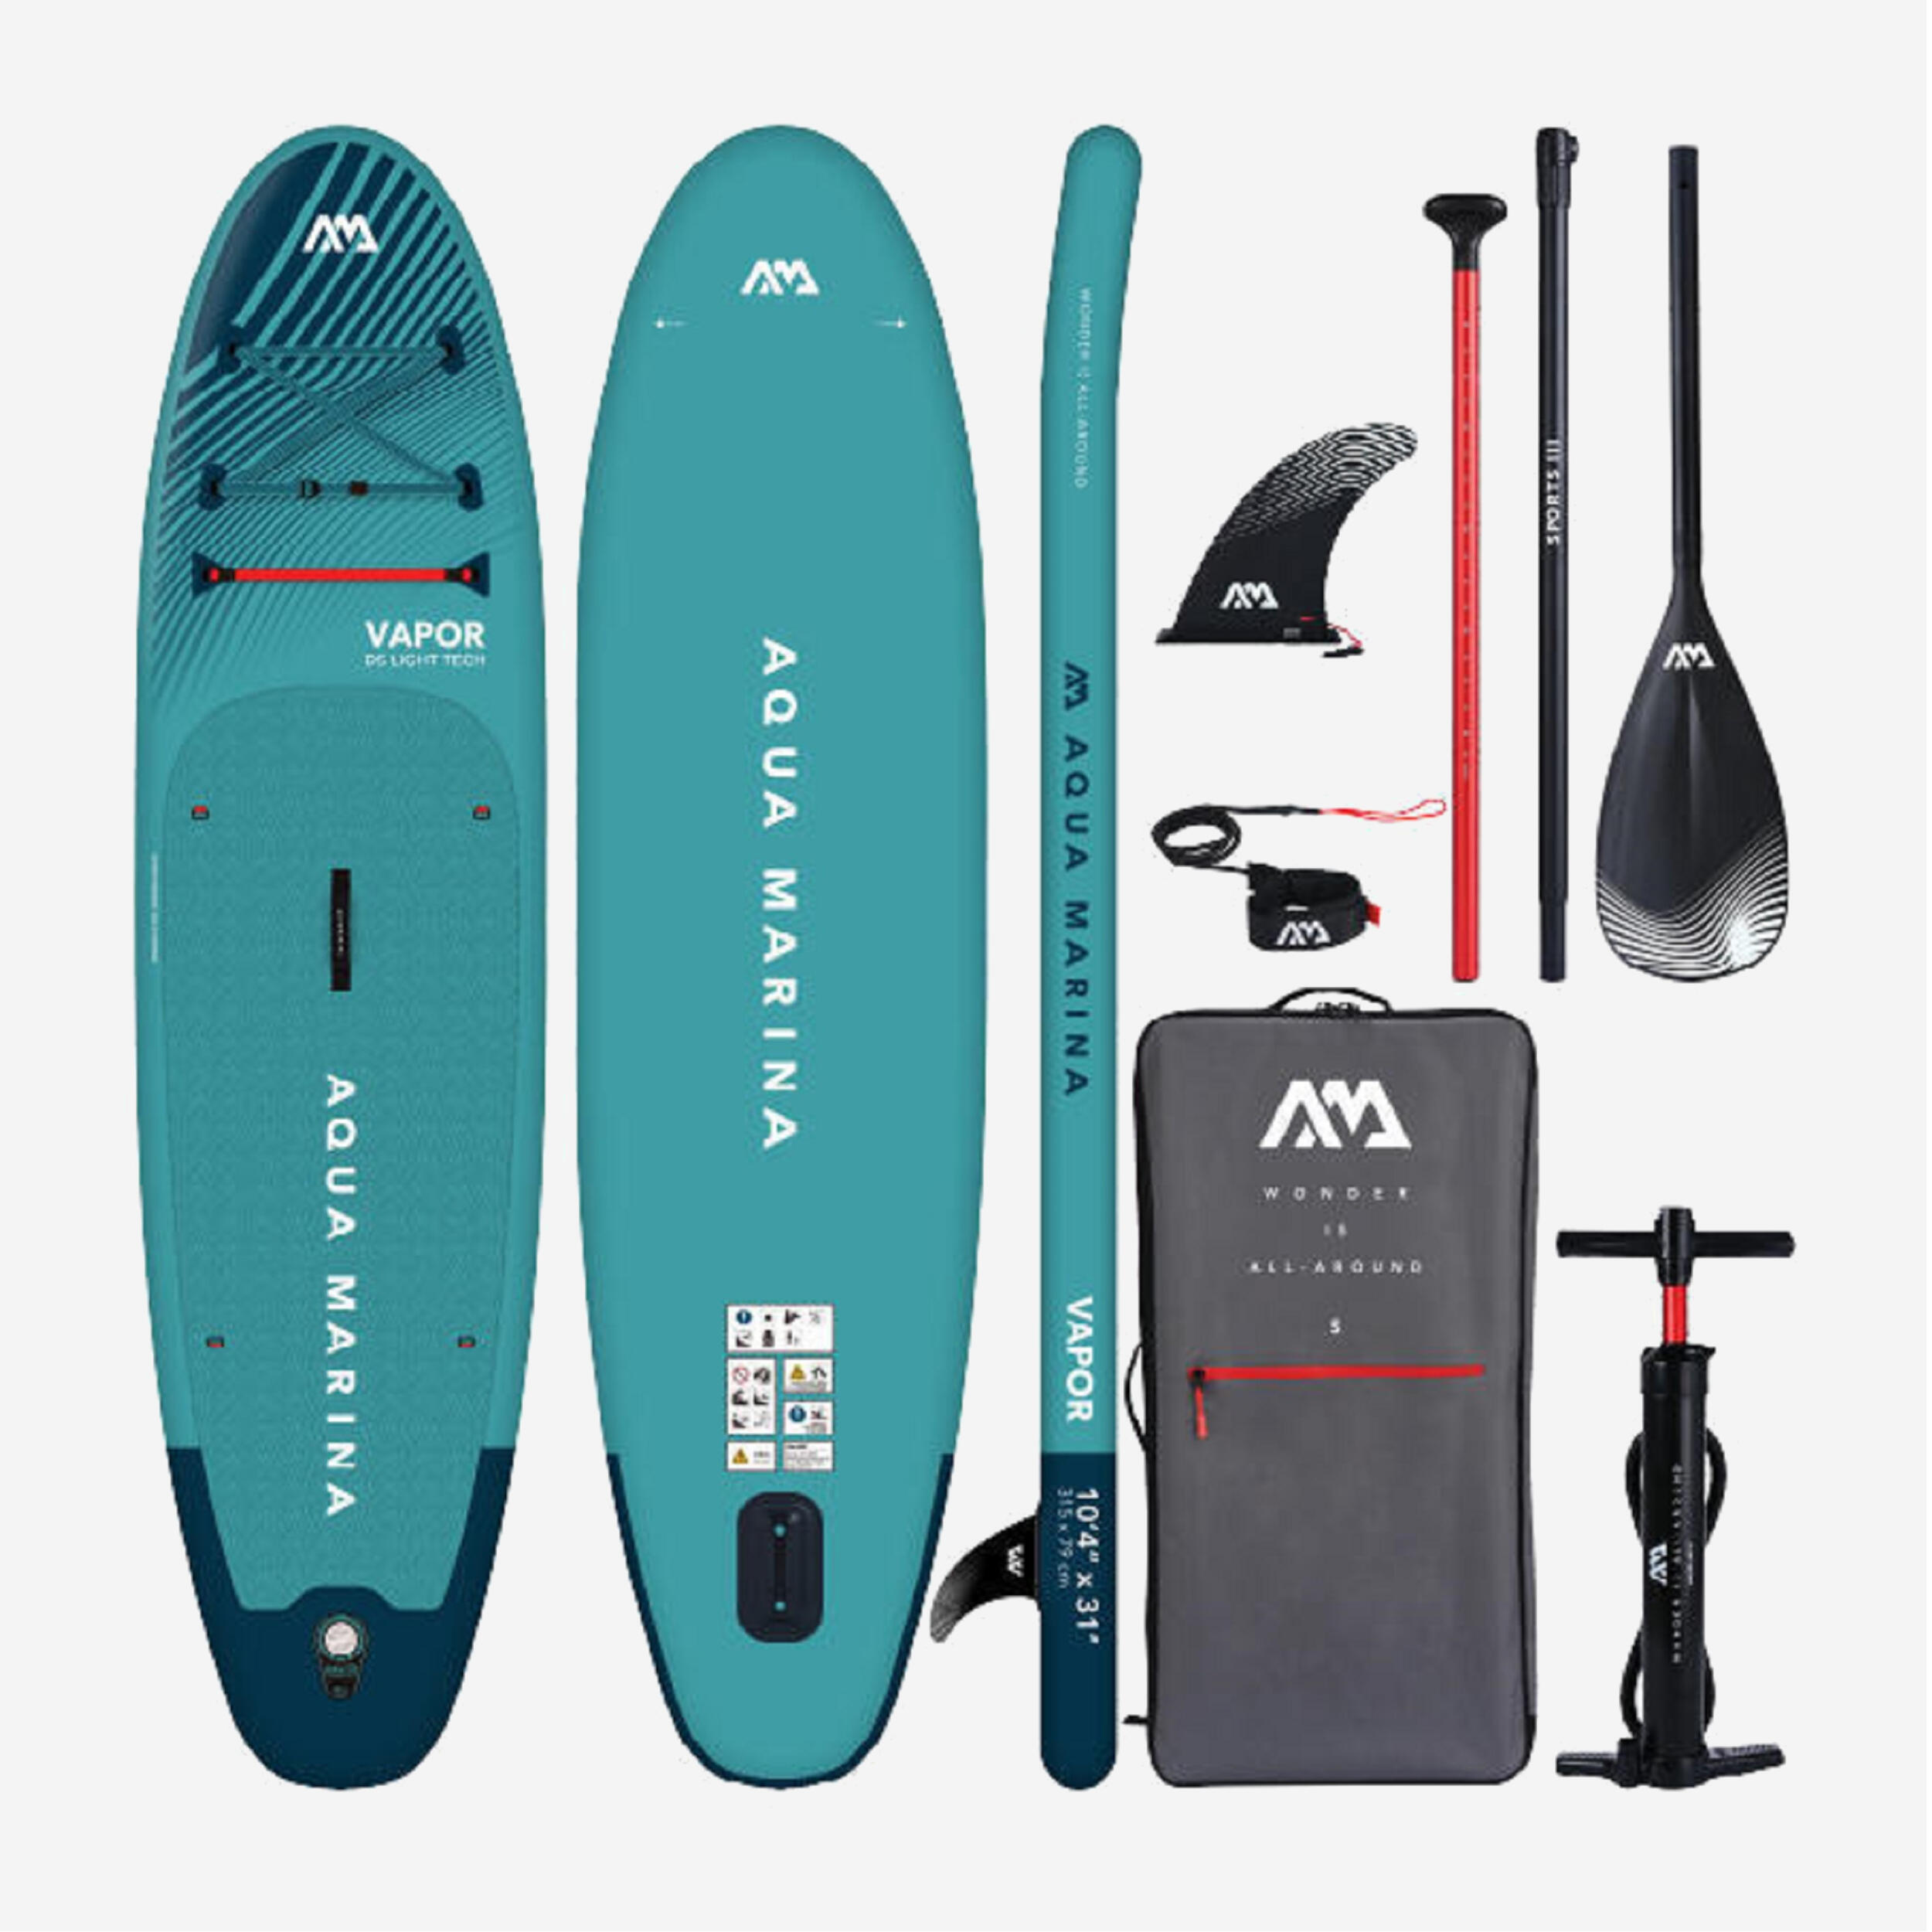 AQUA MARINA Aqua Marina Vapor stand-up paddle board package 10ft4/315cm